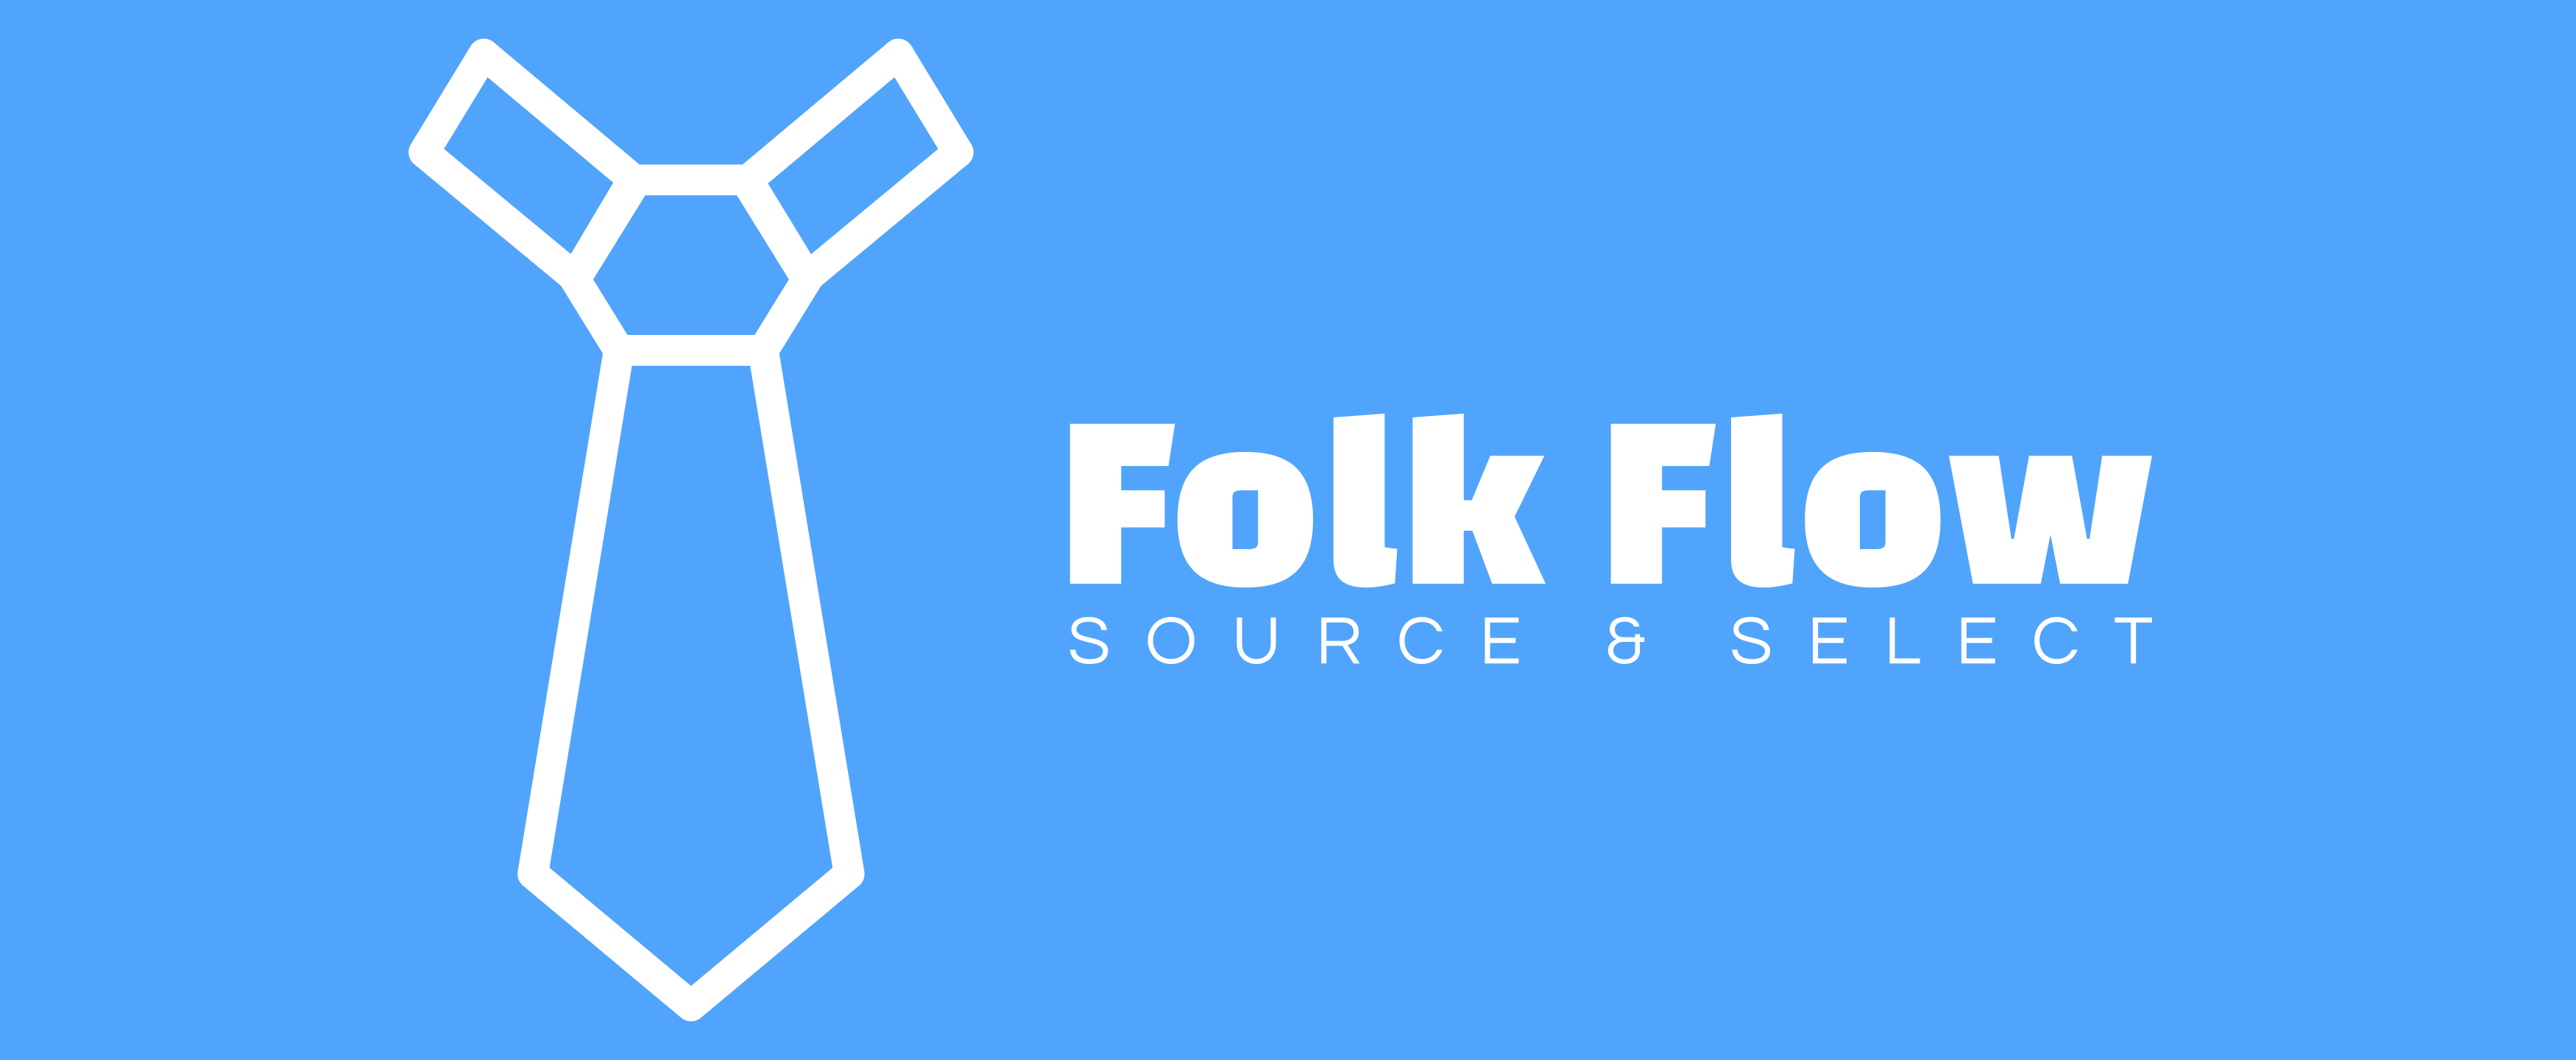 Folk Flow cover